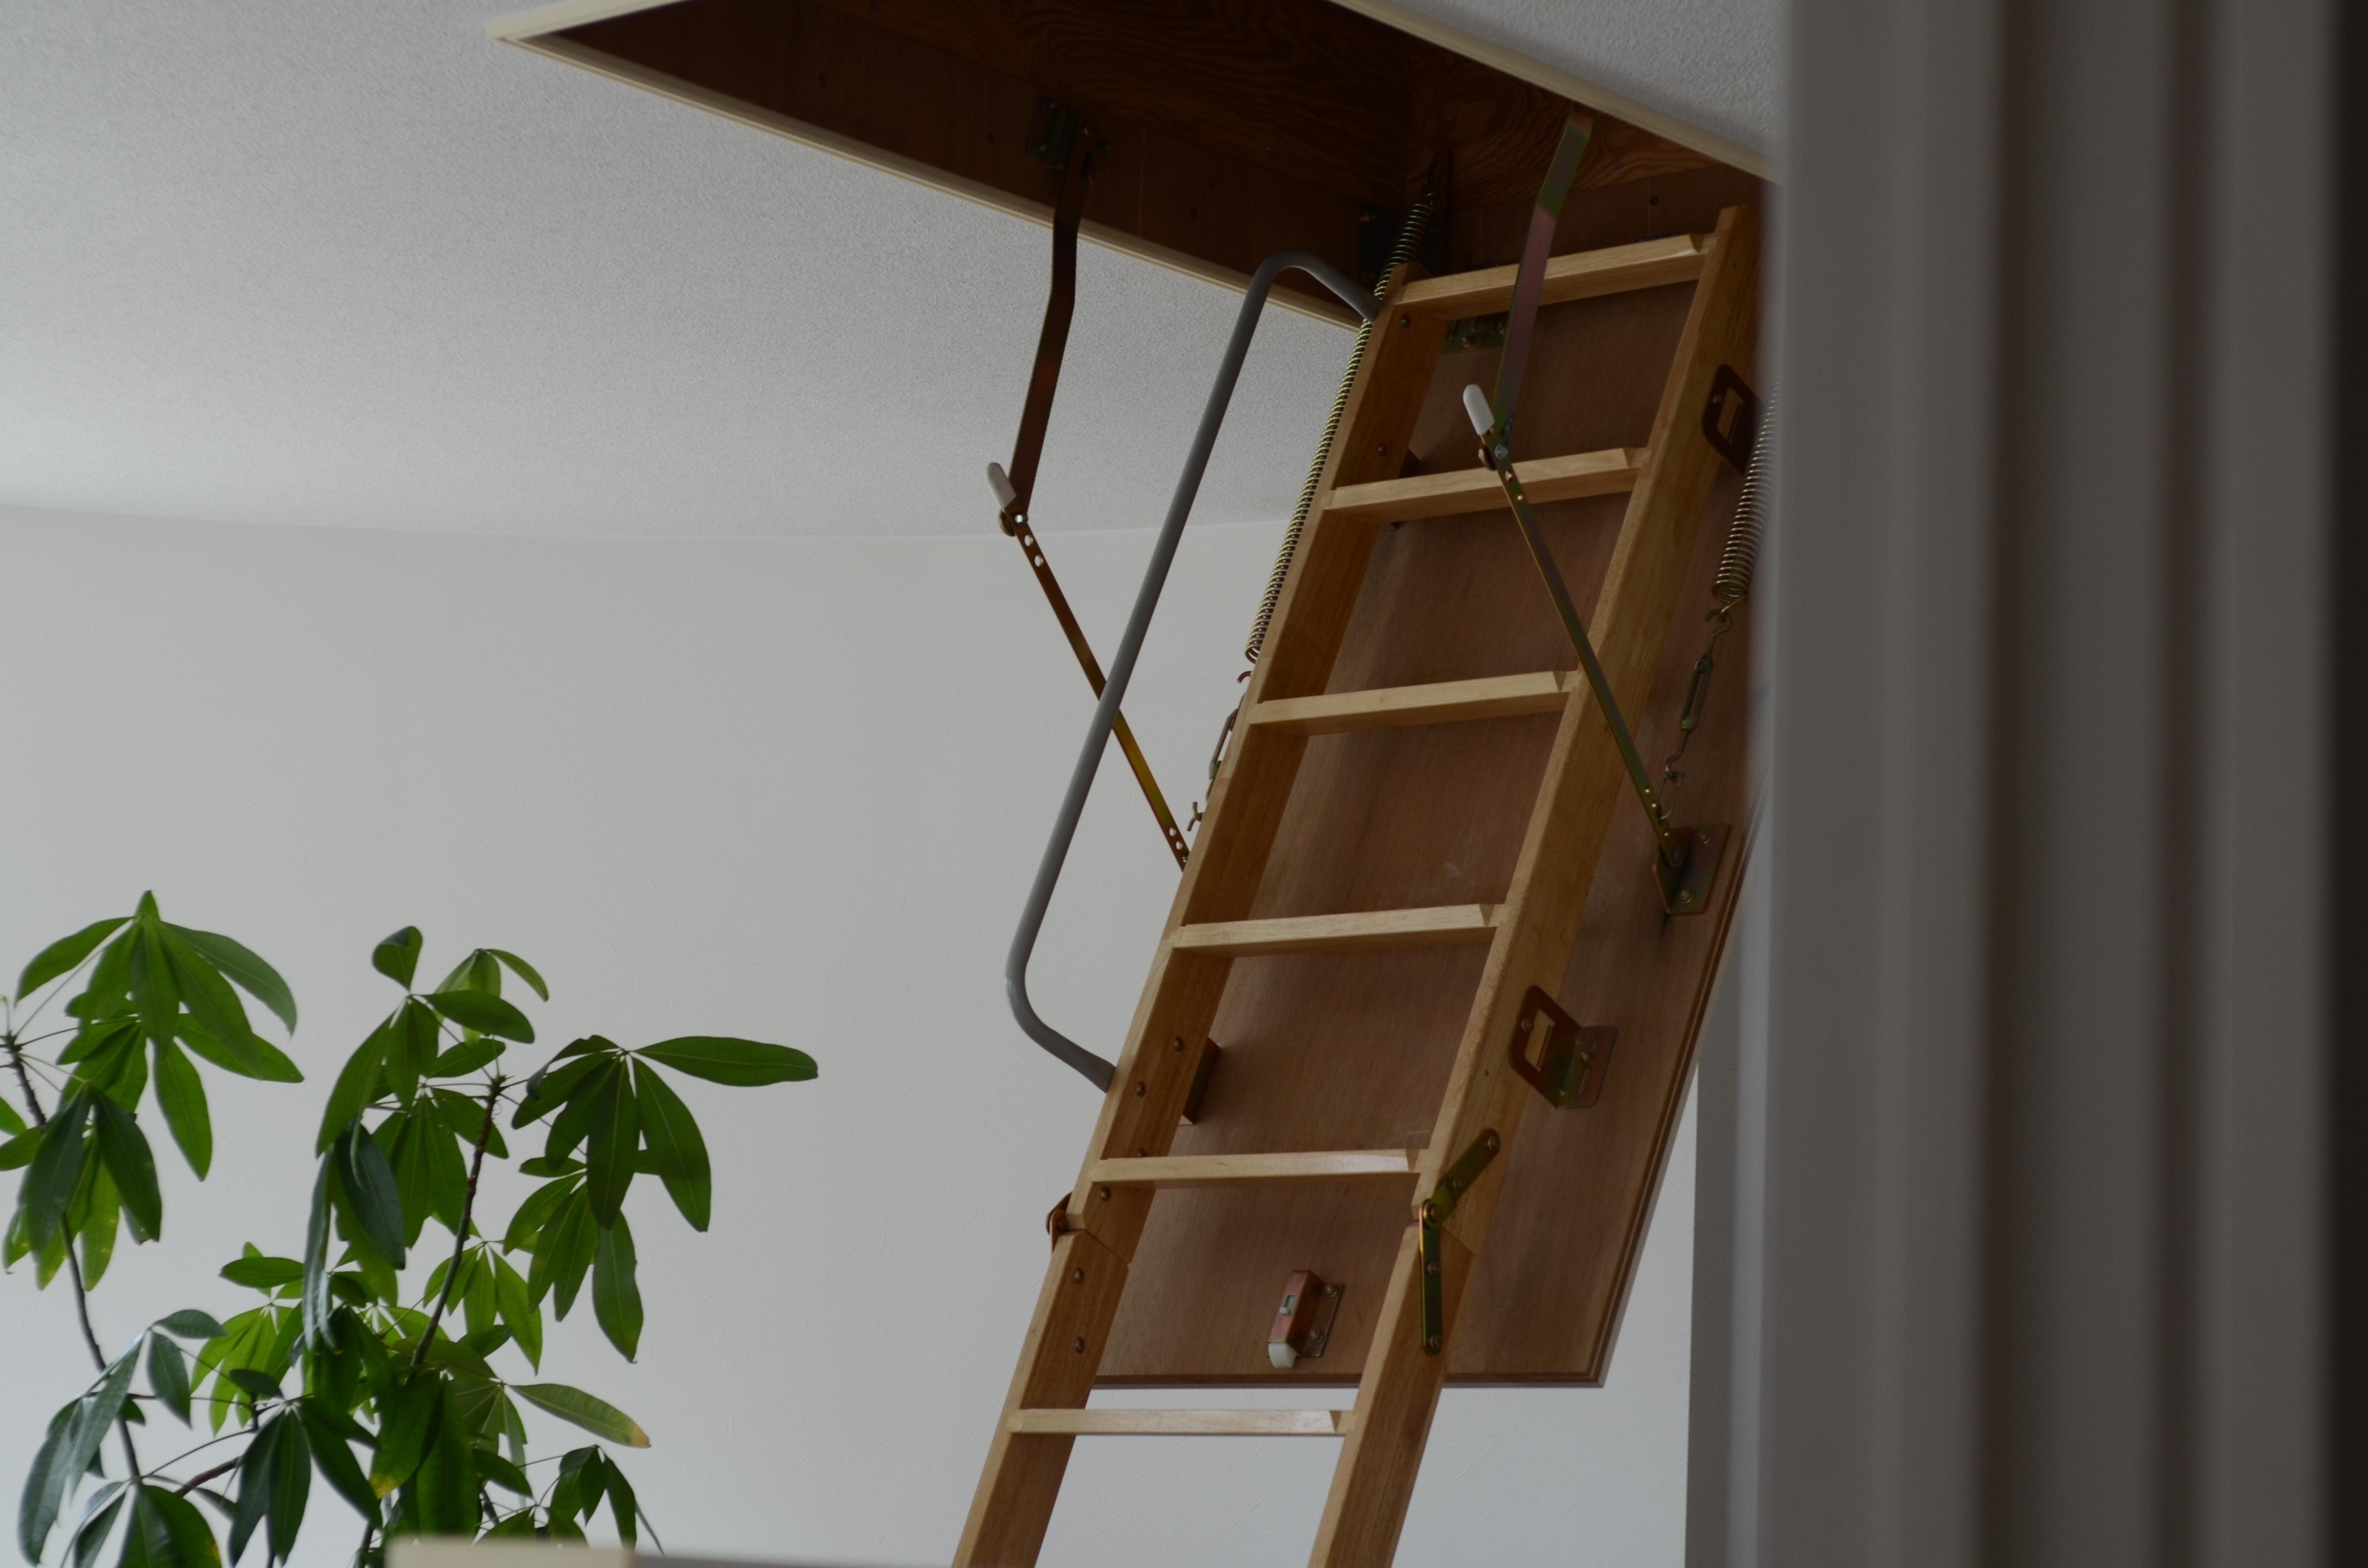 Ladder | Source: Shutterstock